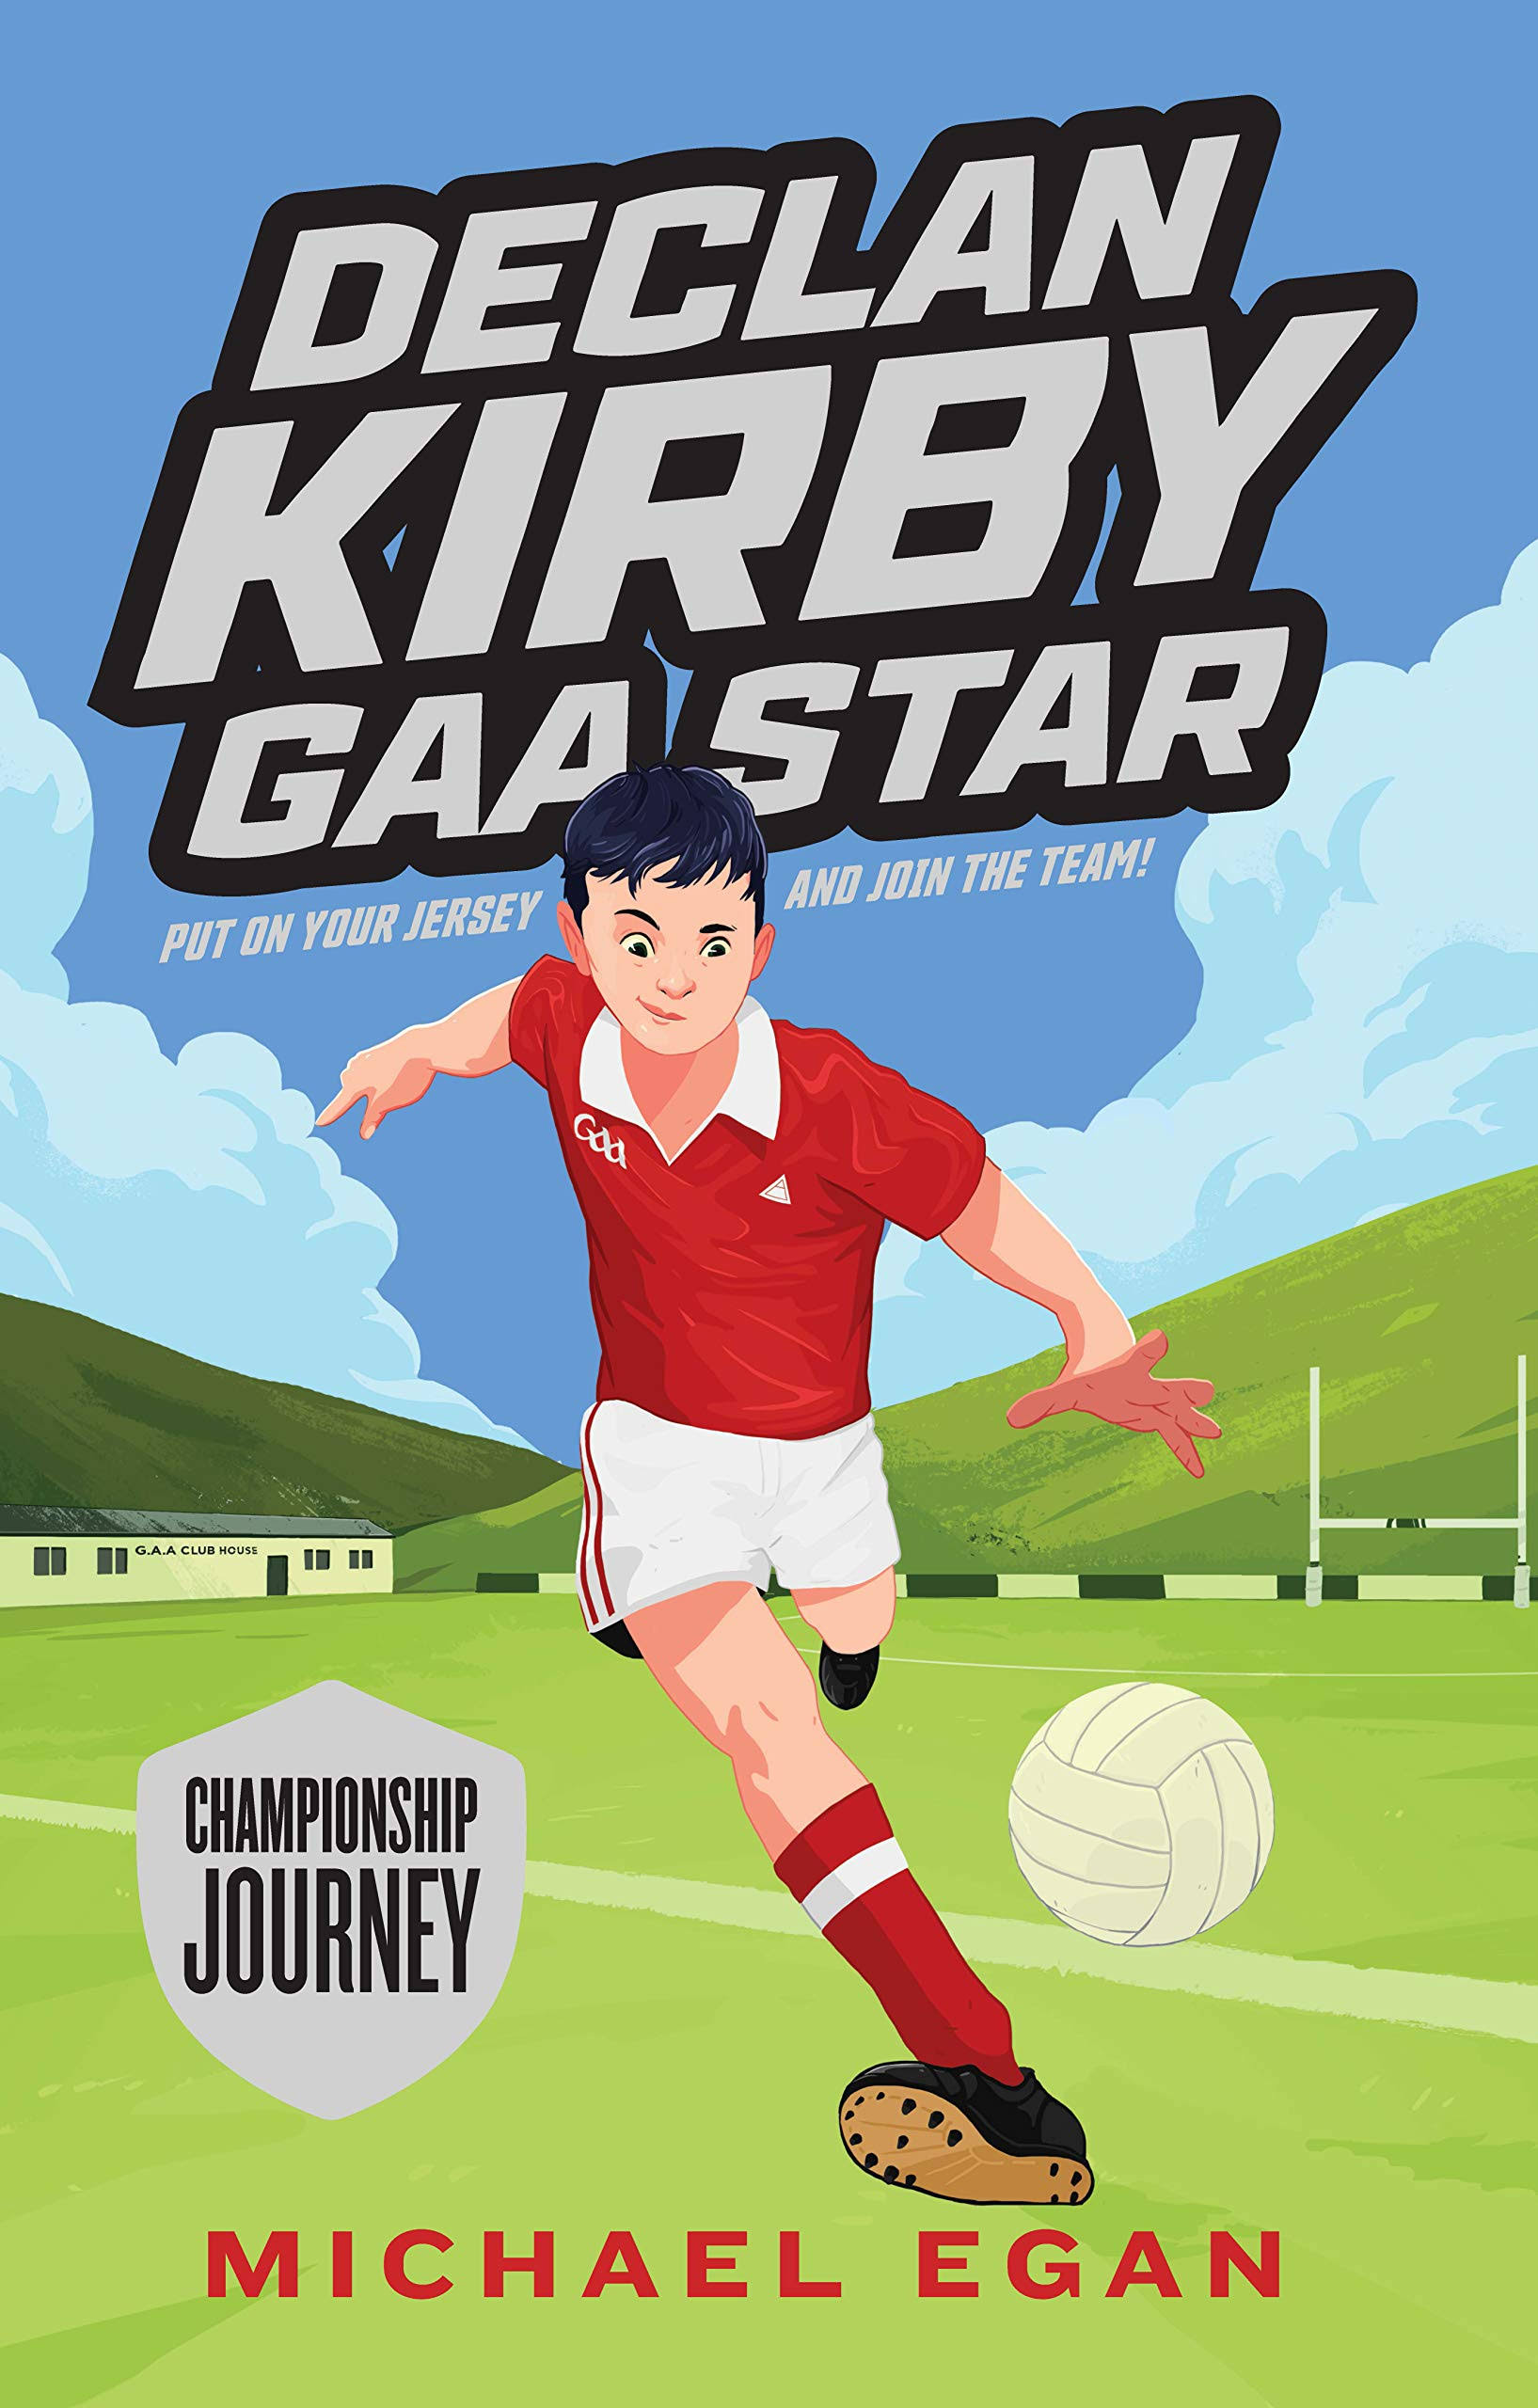 Declan Kirby - GAA Star by Michael Egan